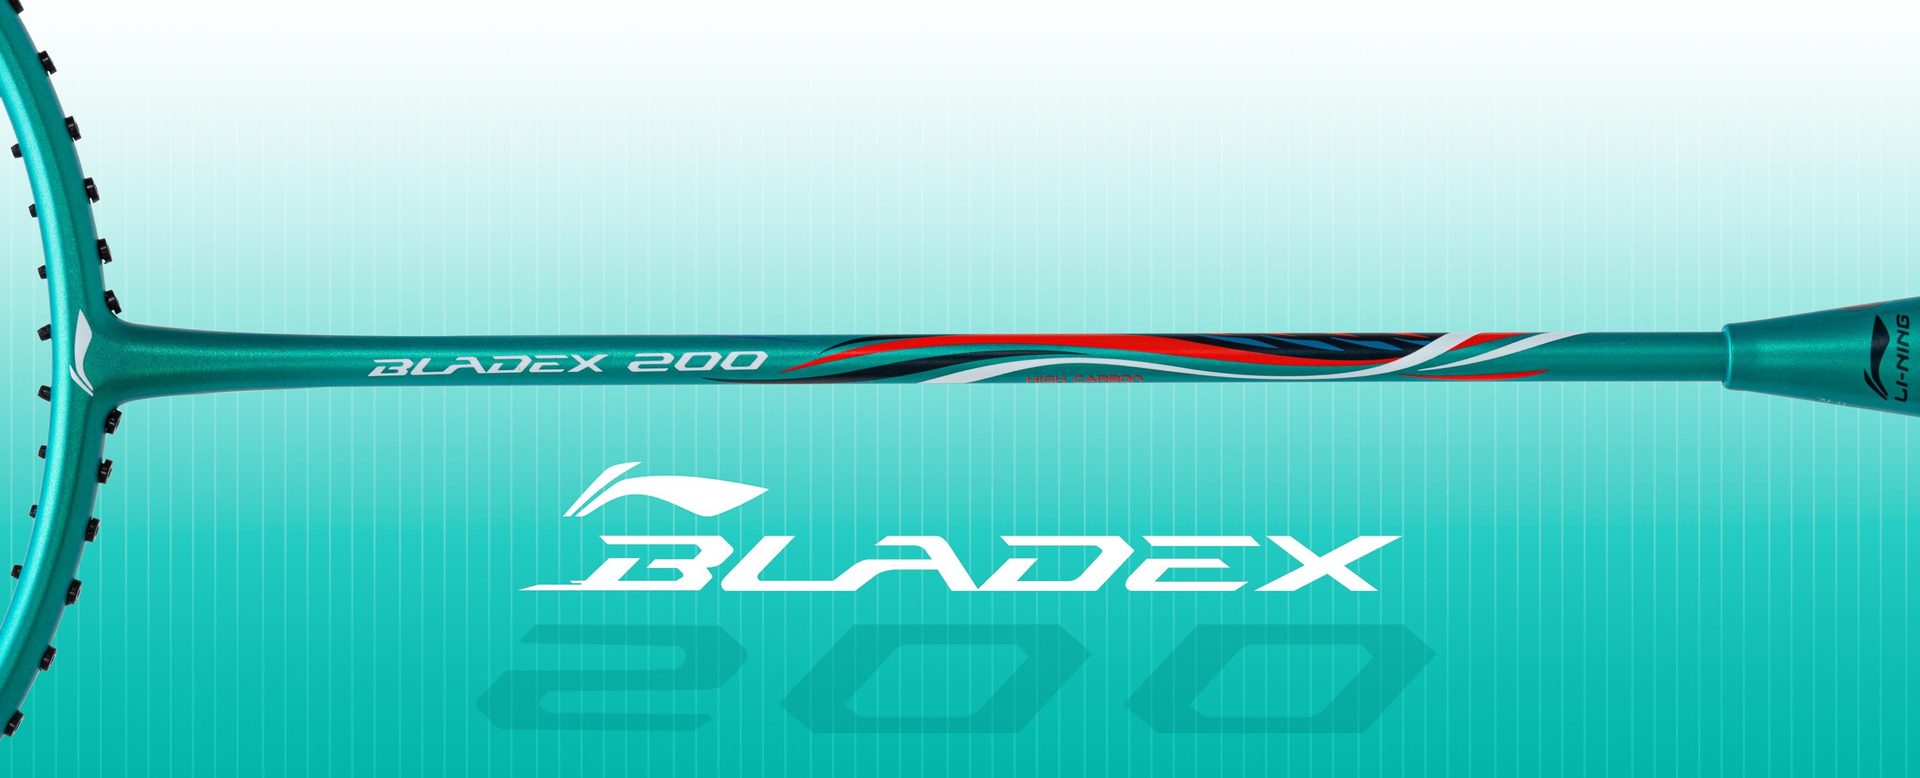 Close up view of Blade X 200 Badminton racket shaft by Li-Ning Studio